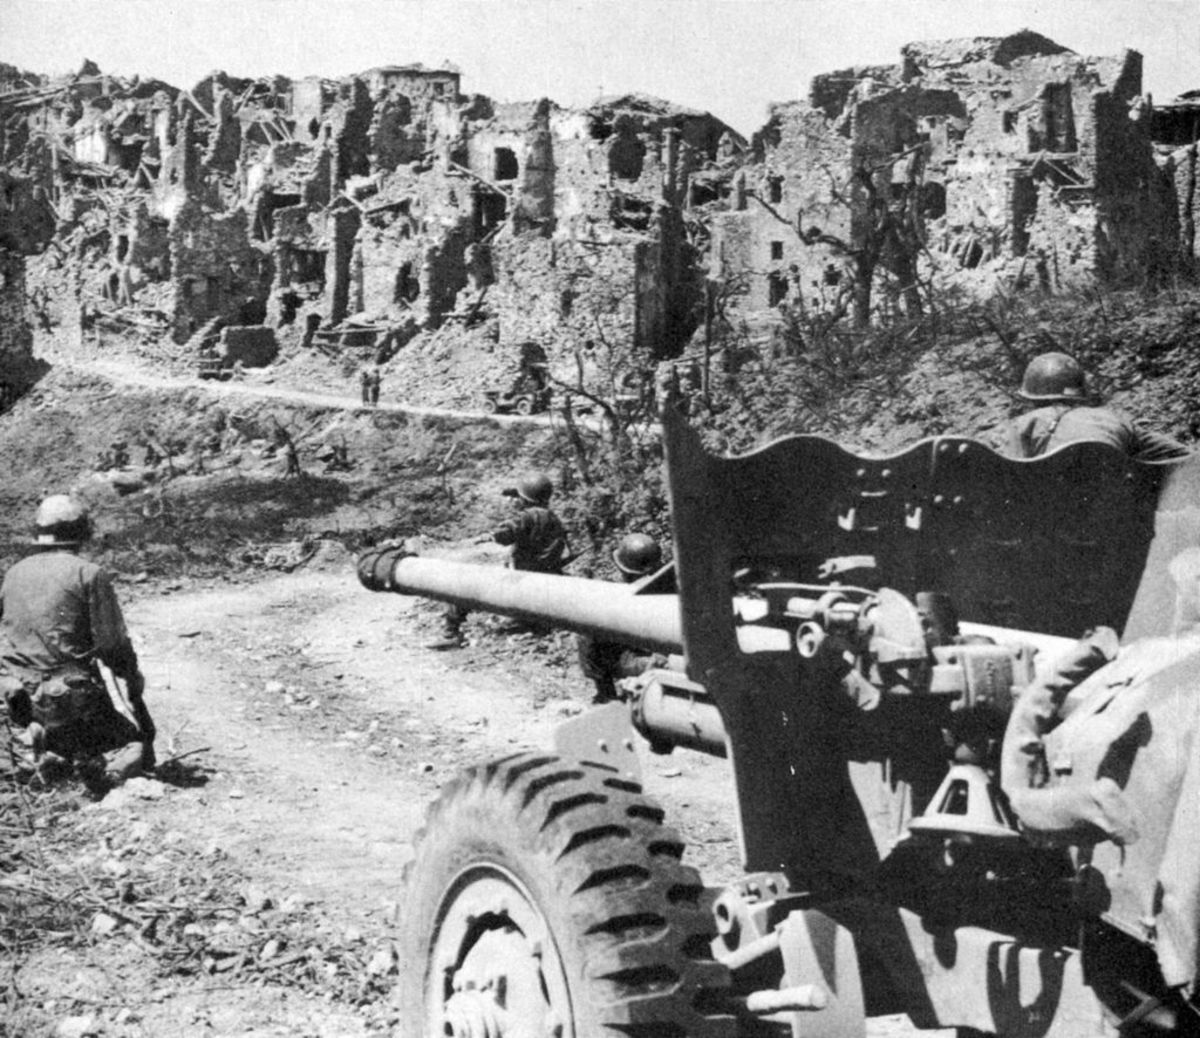 The Battle of Monte Cassino